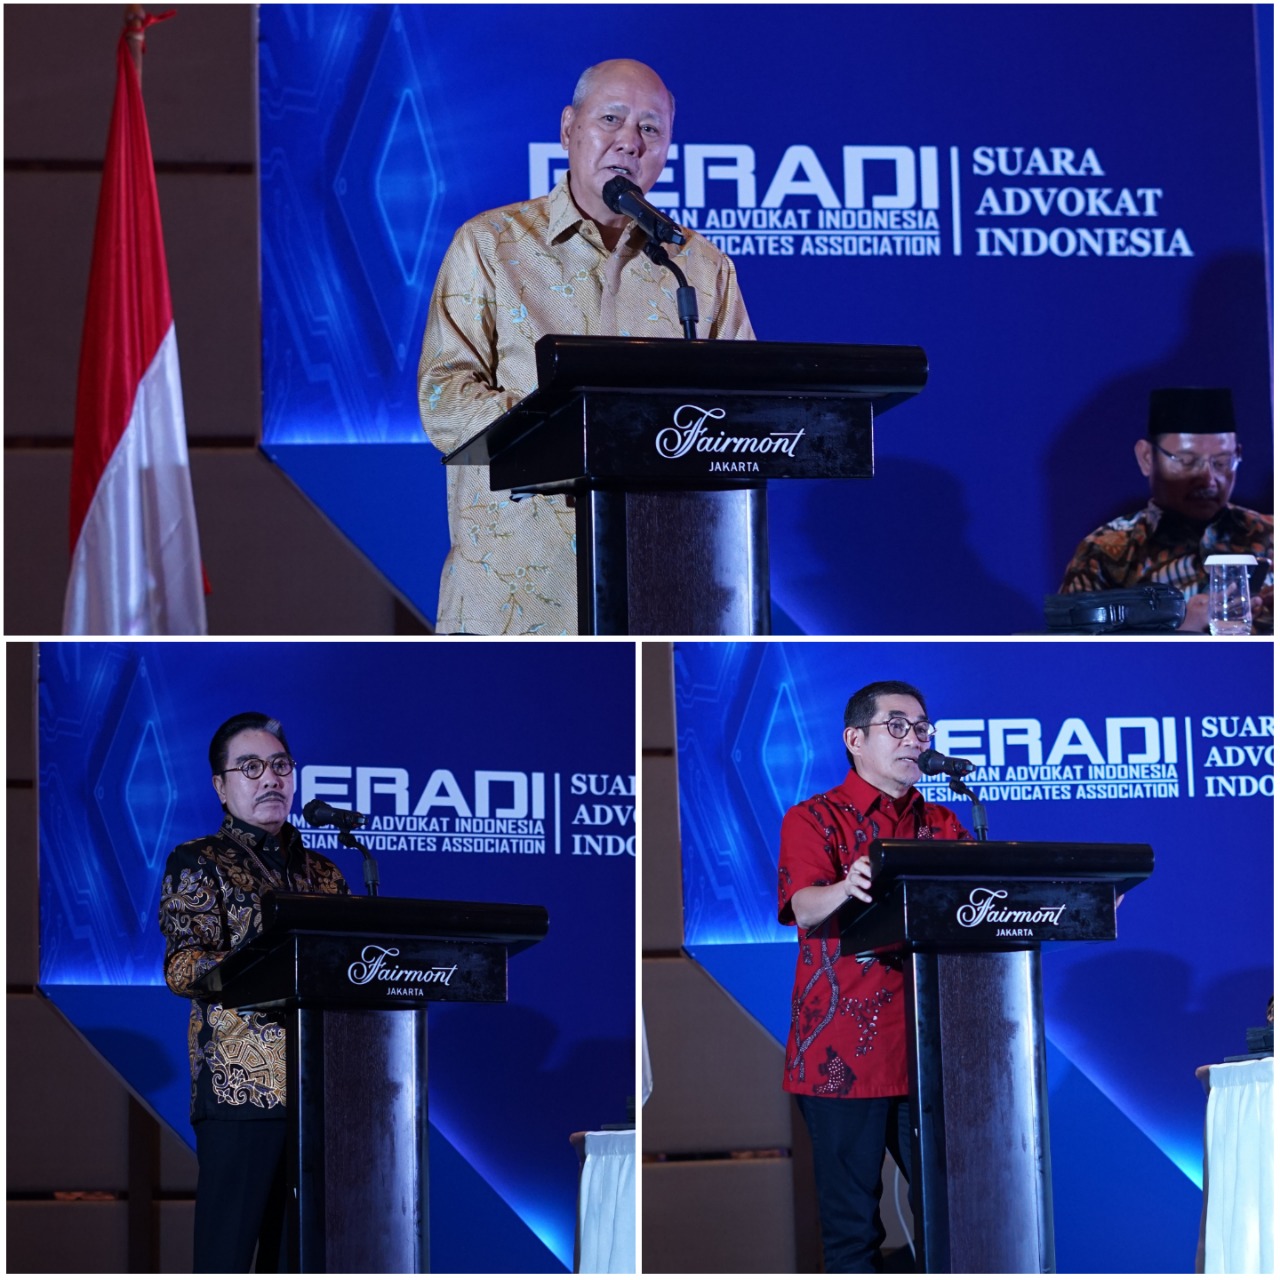 Rapat Dewan Pimpinan Nasional PERADI SAI 2022, (diHotel Fairmont) Jakarta, tanggal 05 Agustus 2022